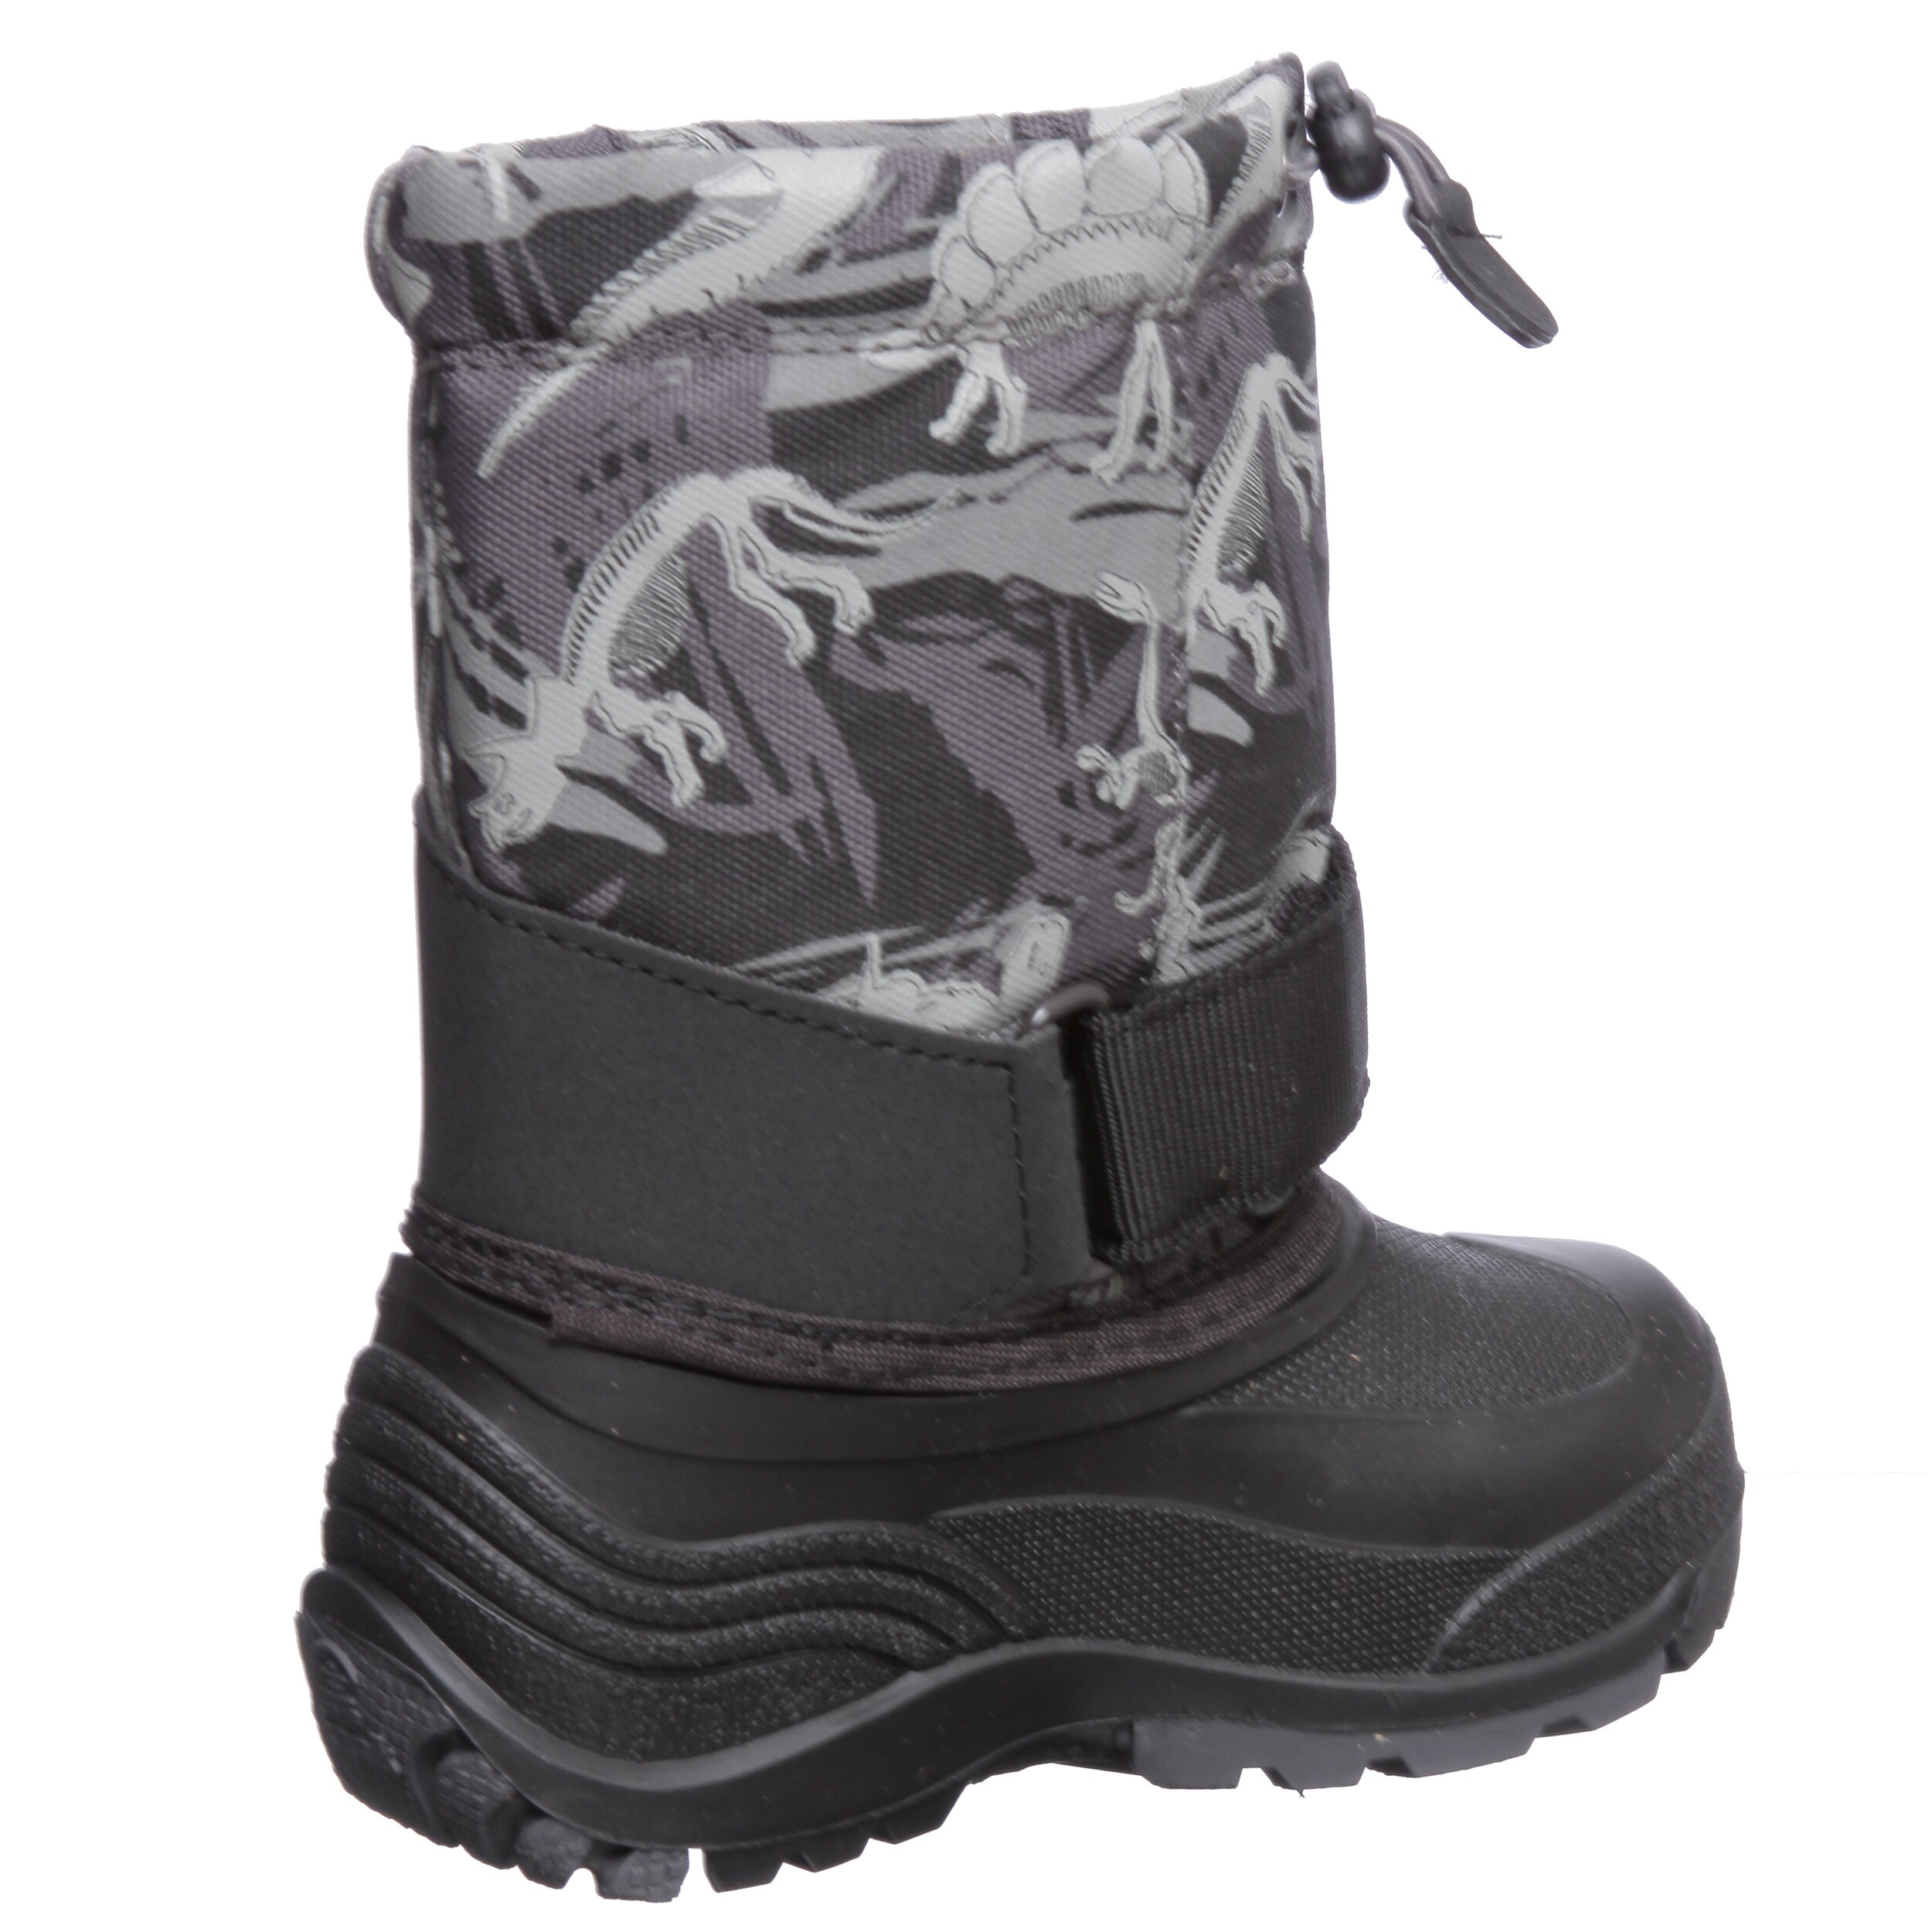 Dinosaur Snow Boots - Overstock 